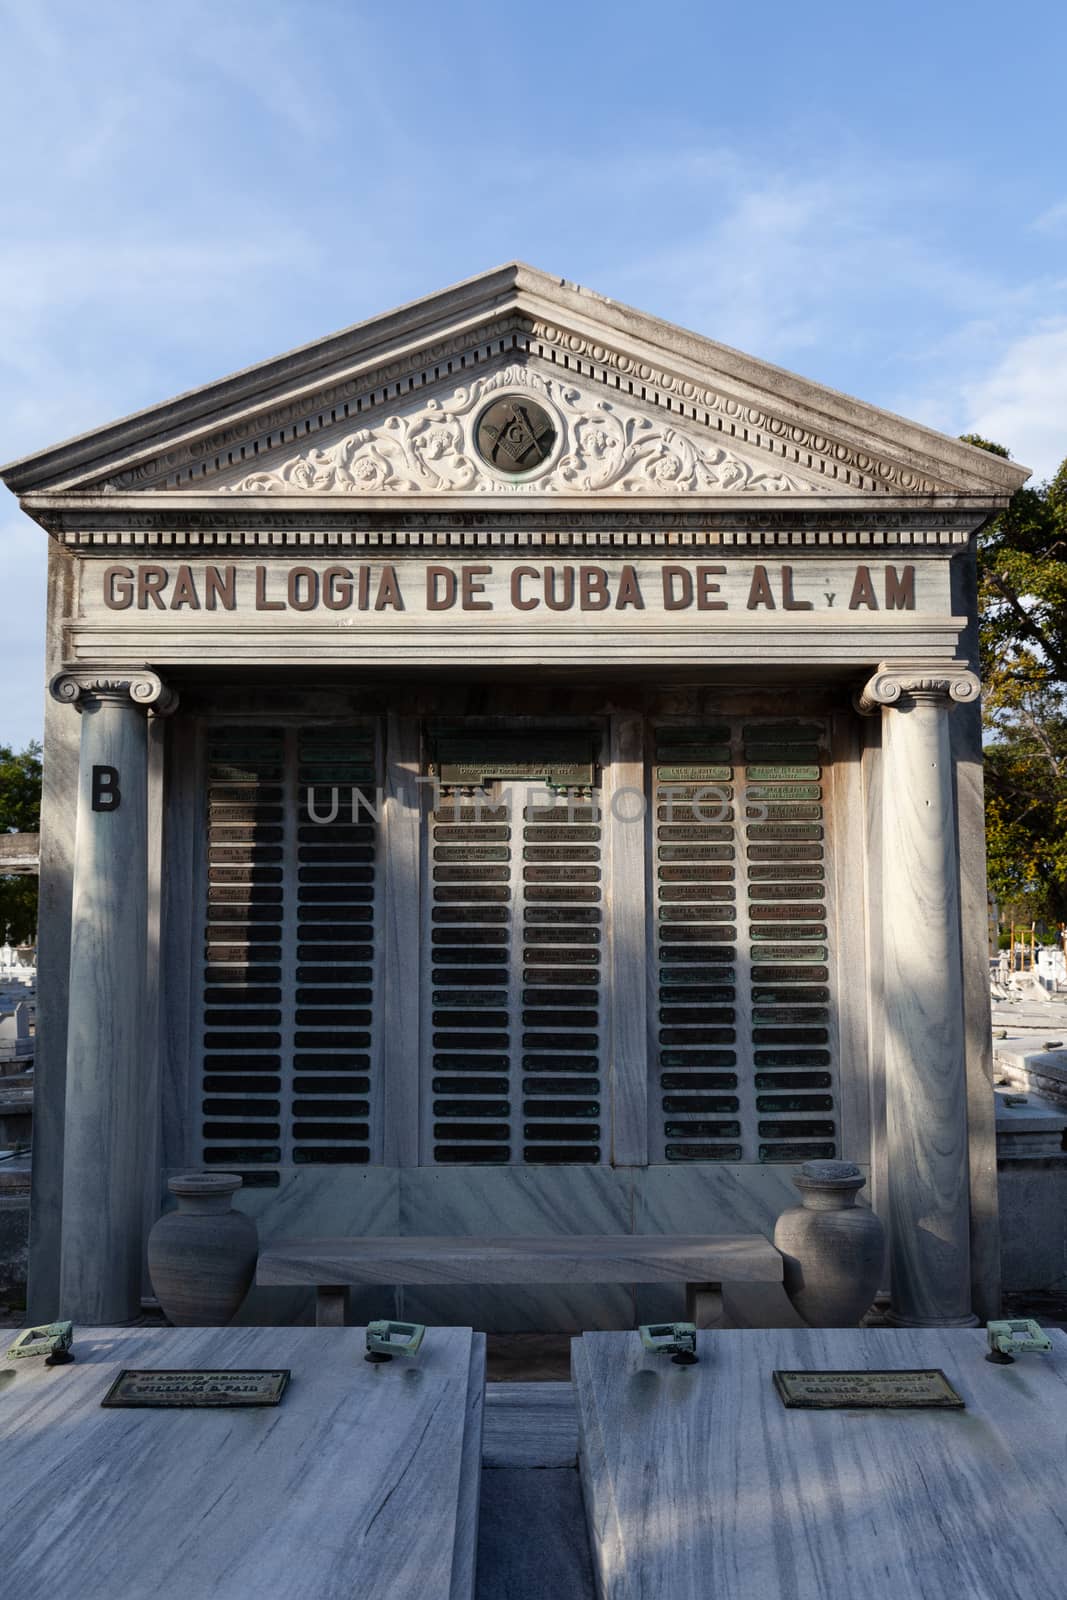 Masonic Burial vault (tomb), Colon Cemetery, Havana, Cuba by vlad-m